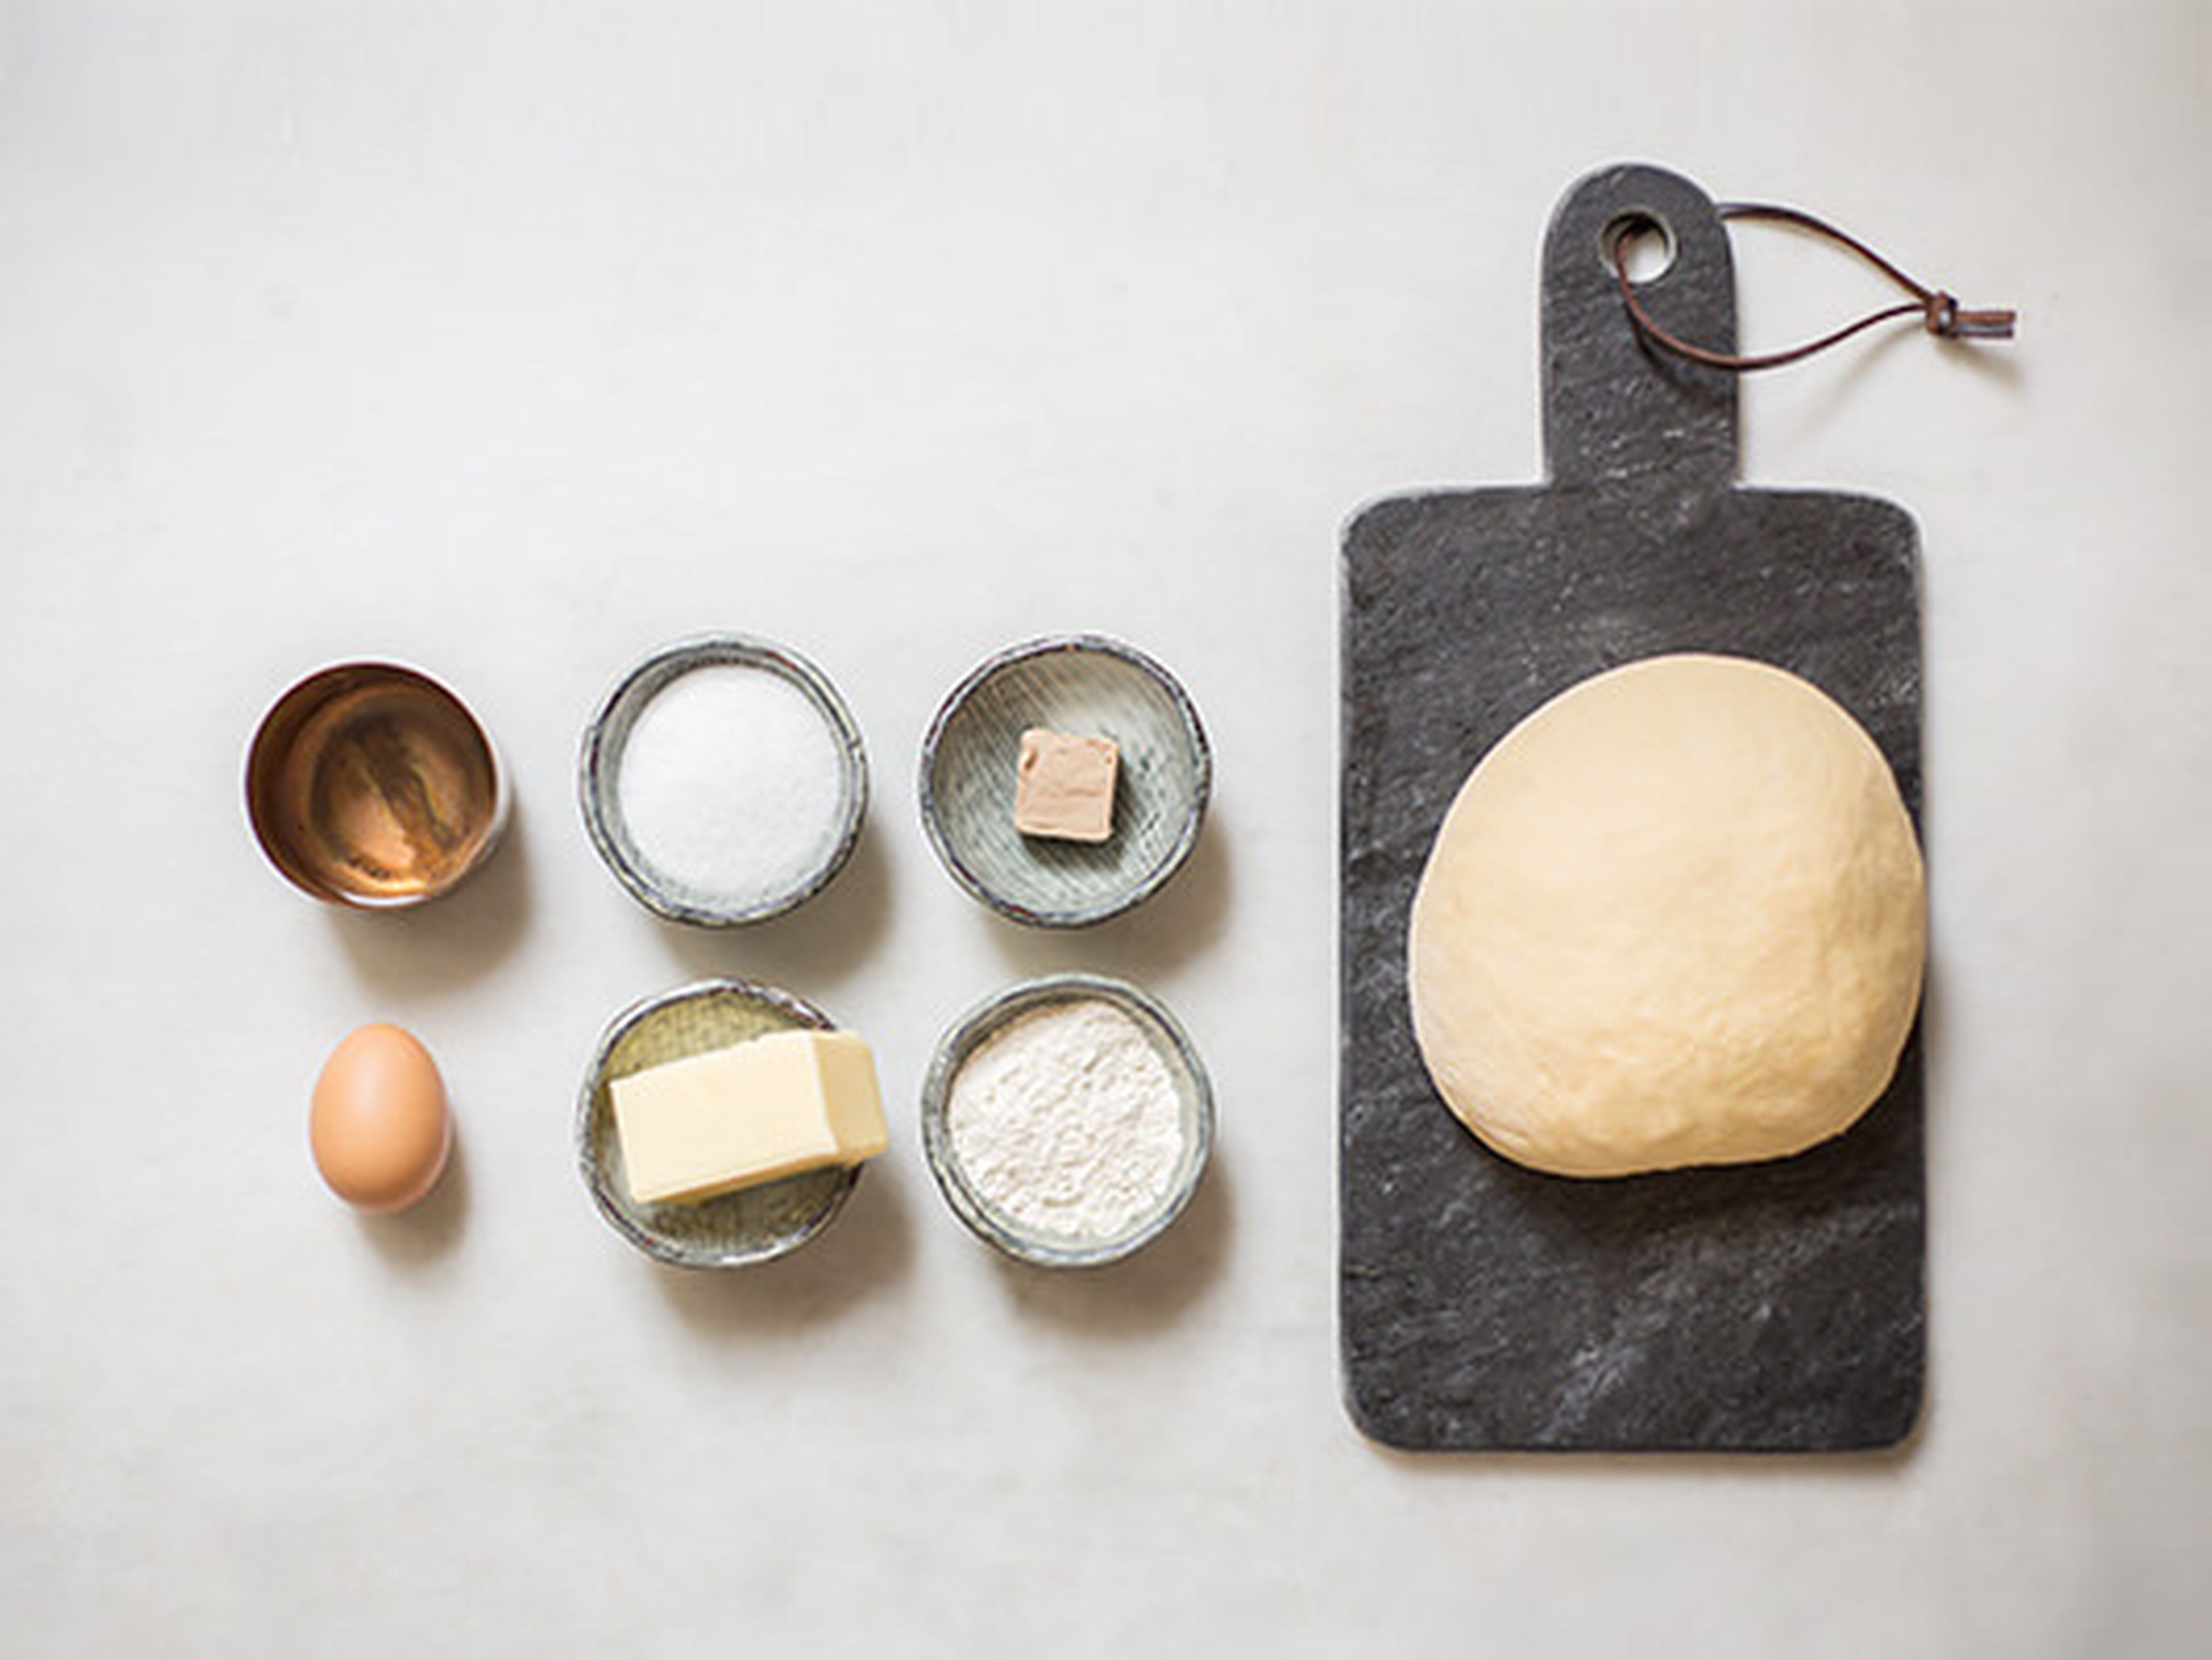 Basic yeast dough